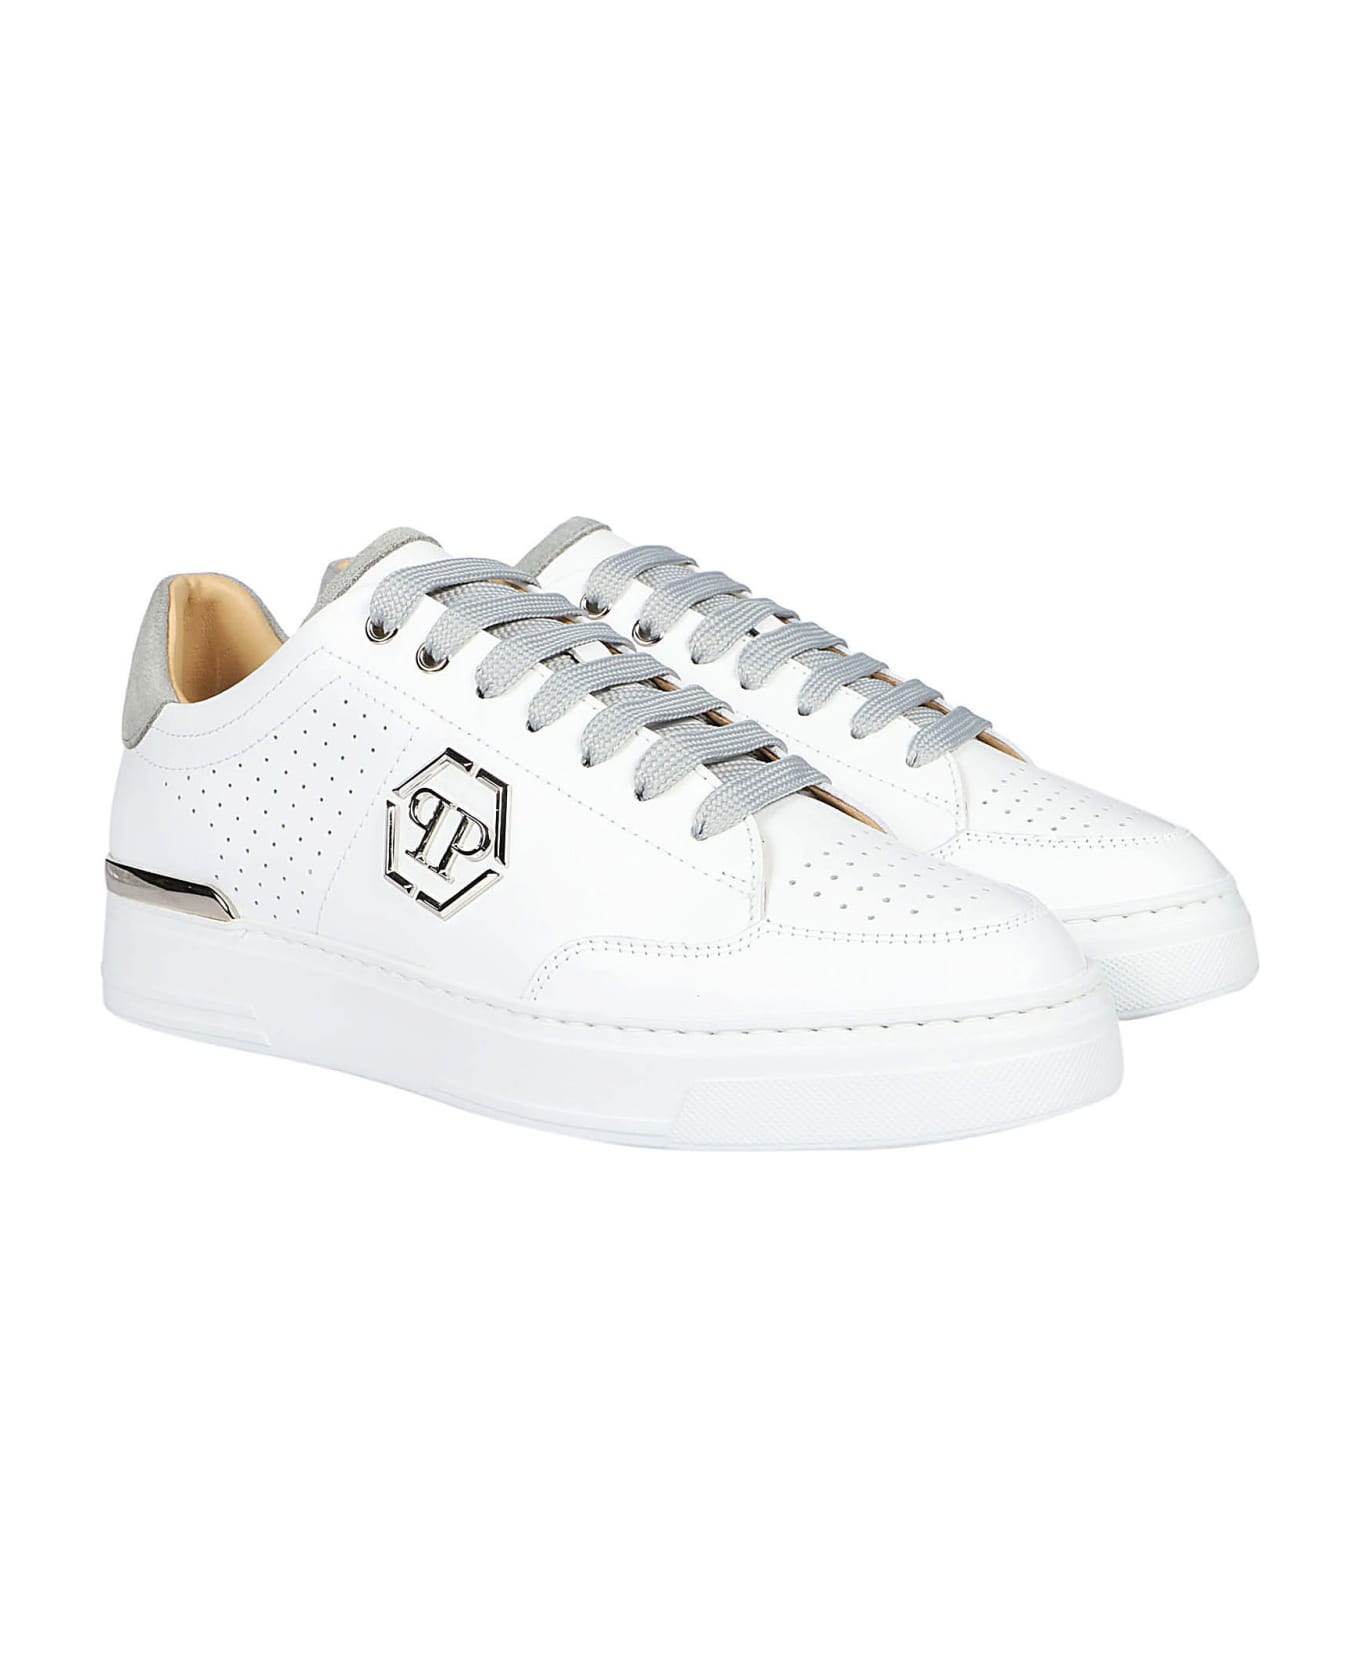 Philipp Plein Low Top Sneakers - White/grey